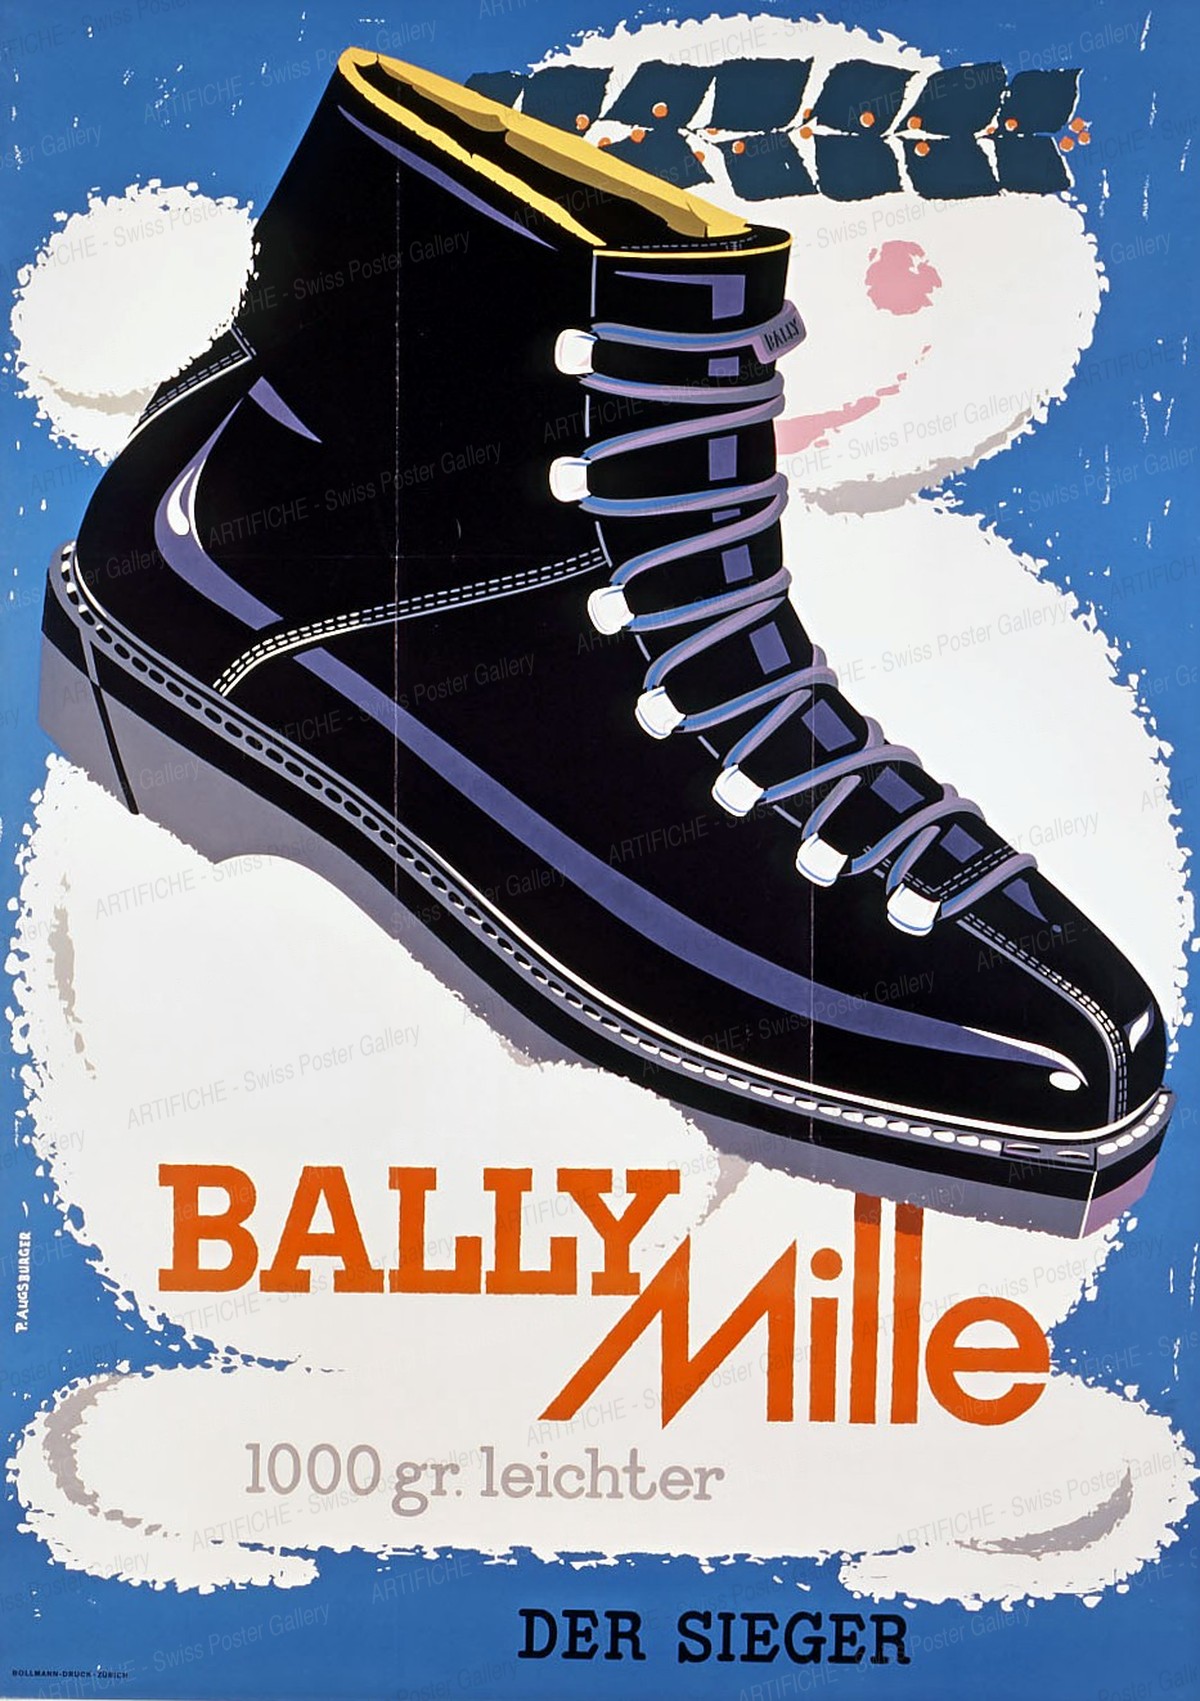 Bally Mille – the winner, Pierre Augsburger